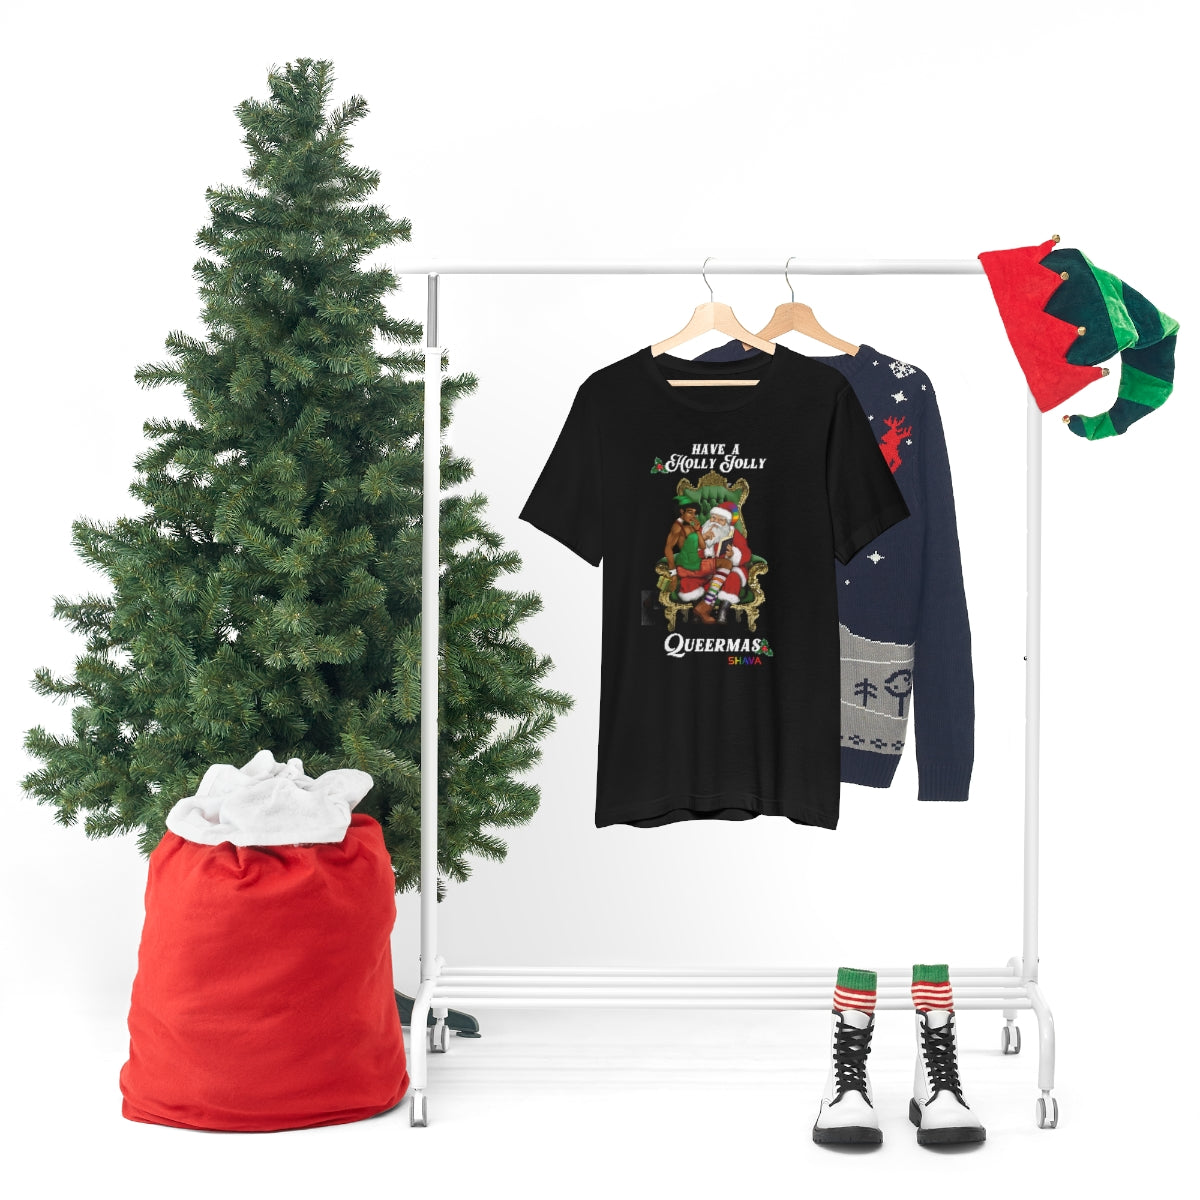 Classic Unisex Christmas LGBTQ Holigays T-Shirt - HollyJolly (Black) Printify